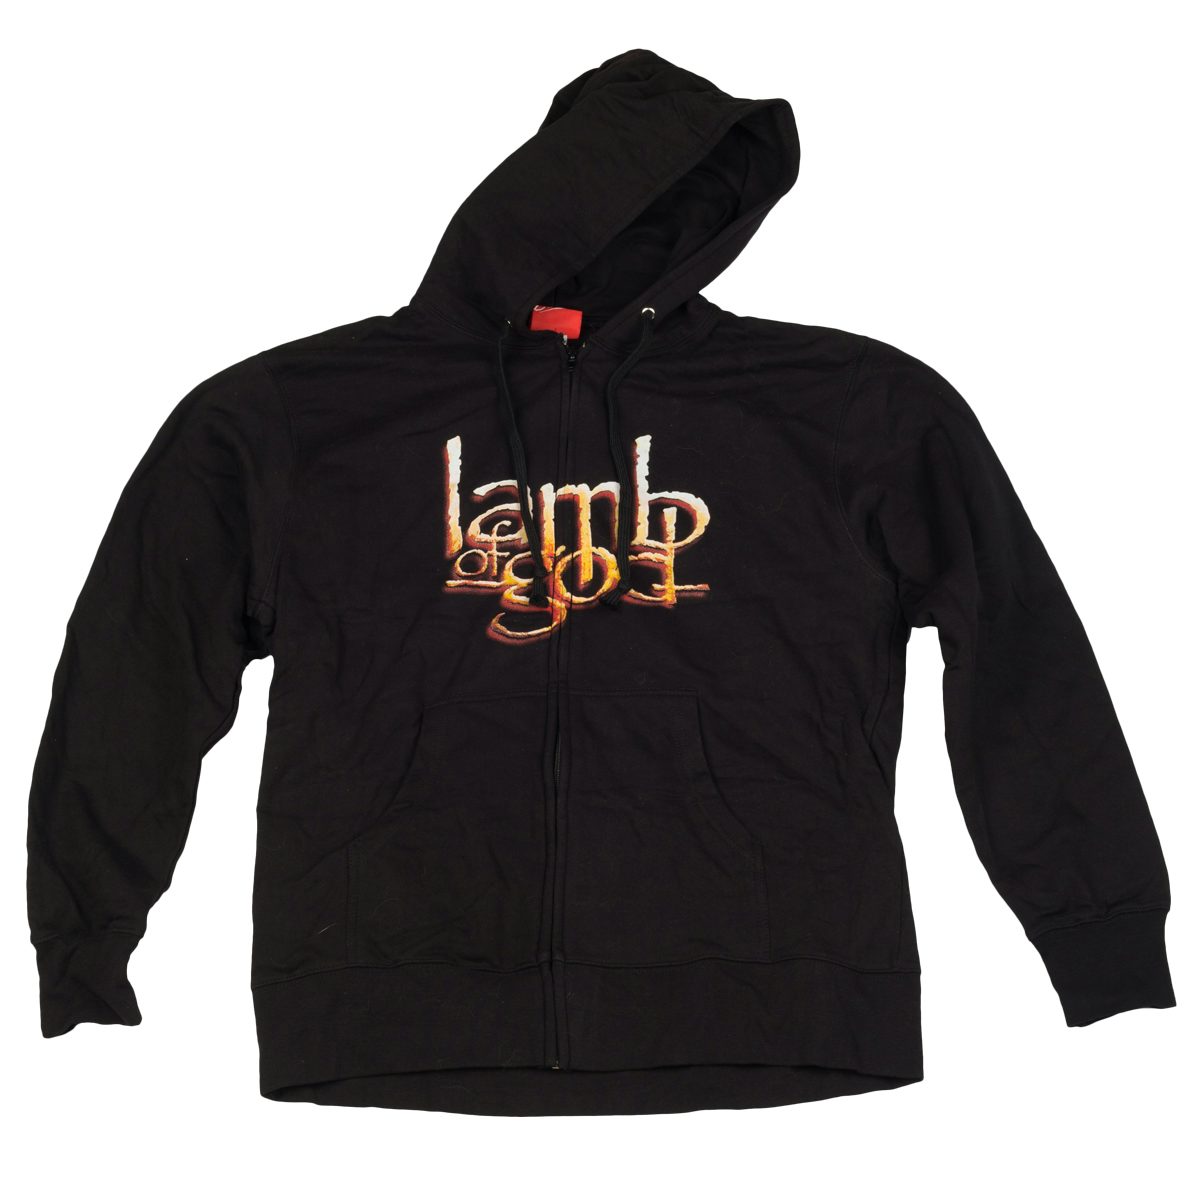 lamb of god zip hoodie